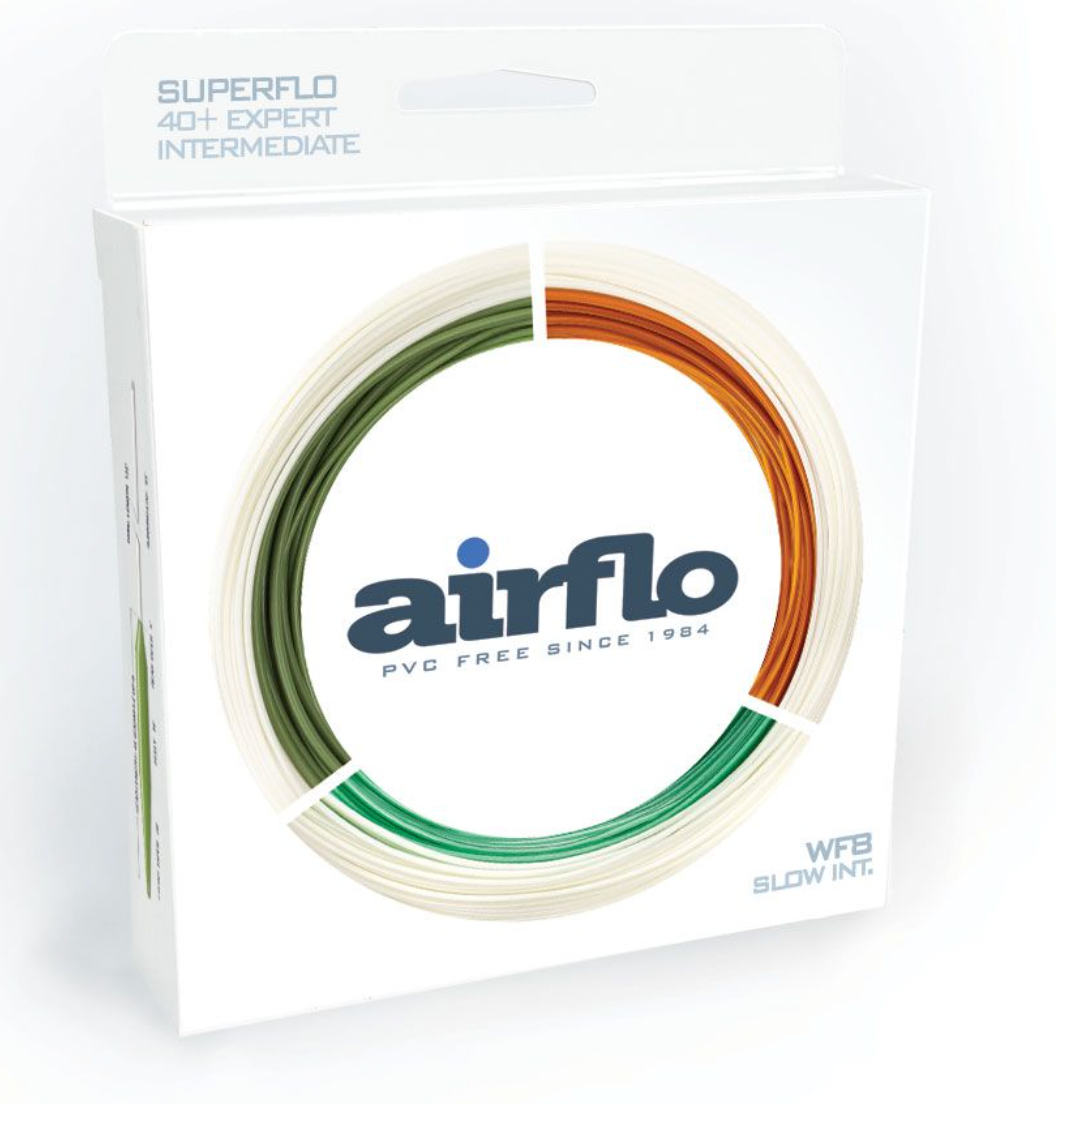 Airflo Superflo 40+ expert float